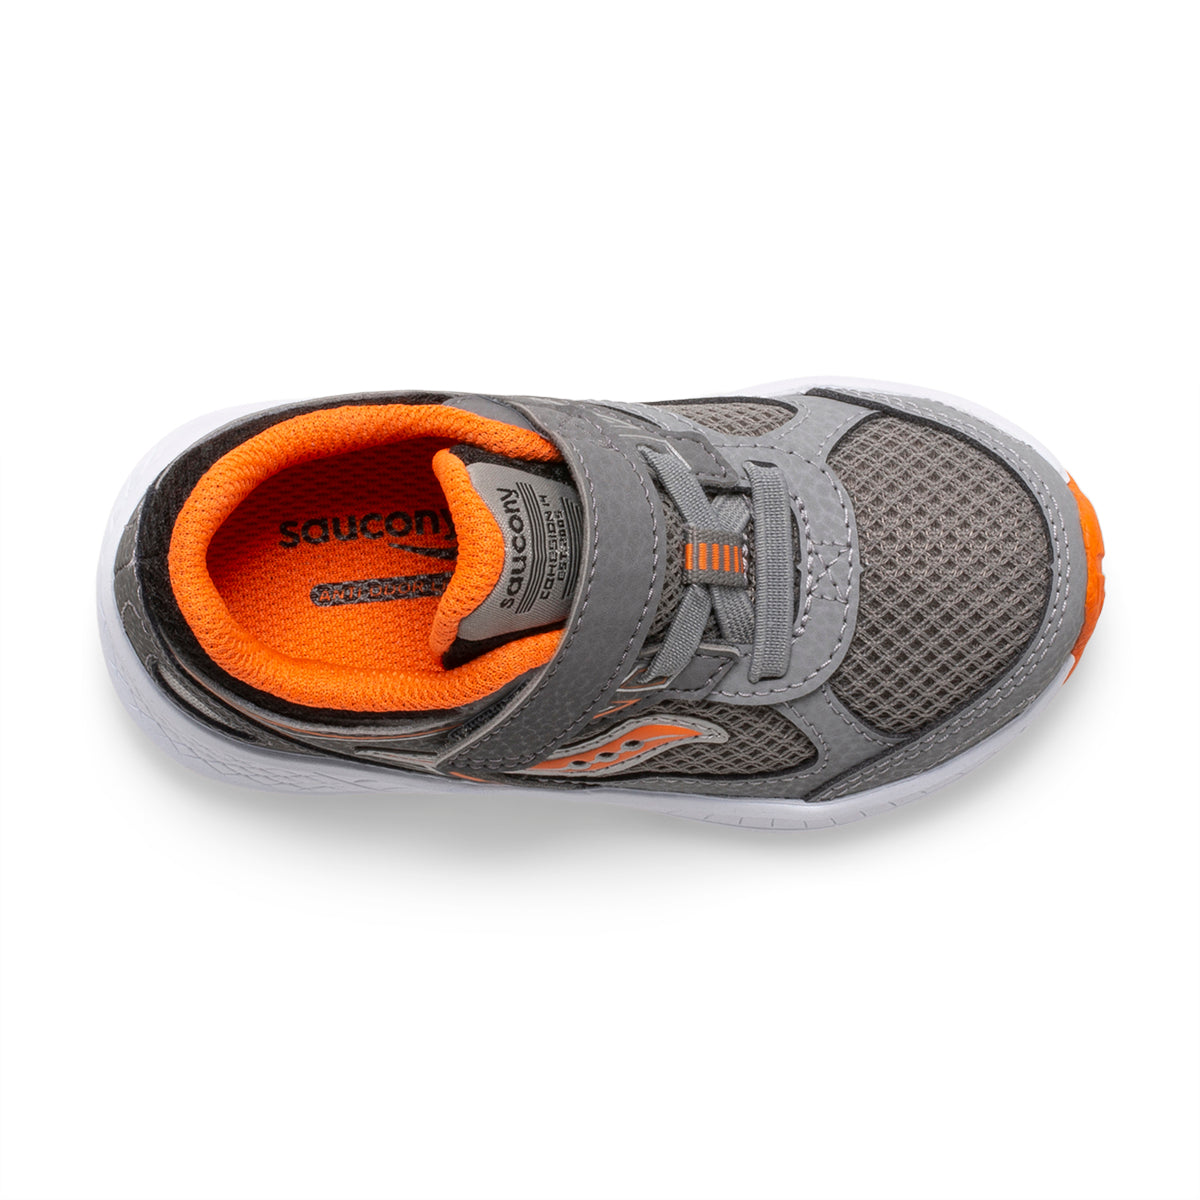 cohesion-14-ac-jr-sneaker-littlekid-grey-orange-black__Grey/Orange/Black_5